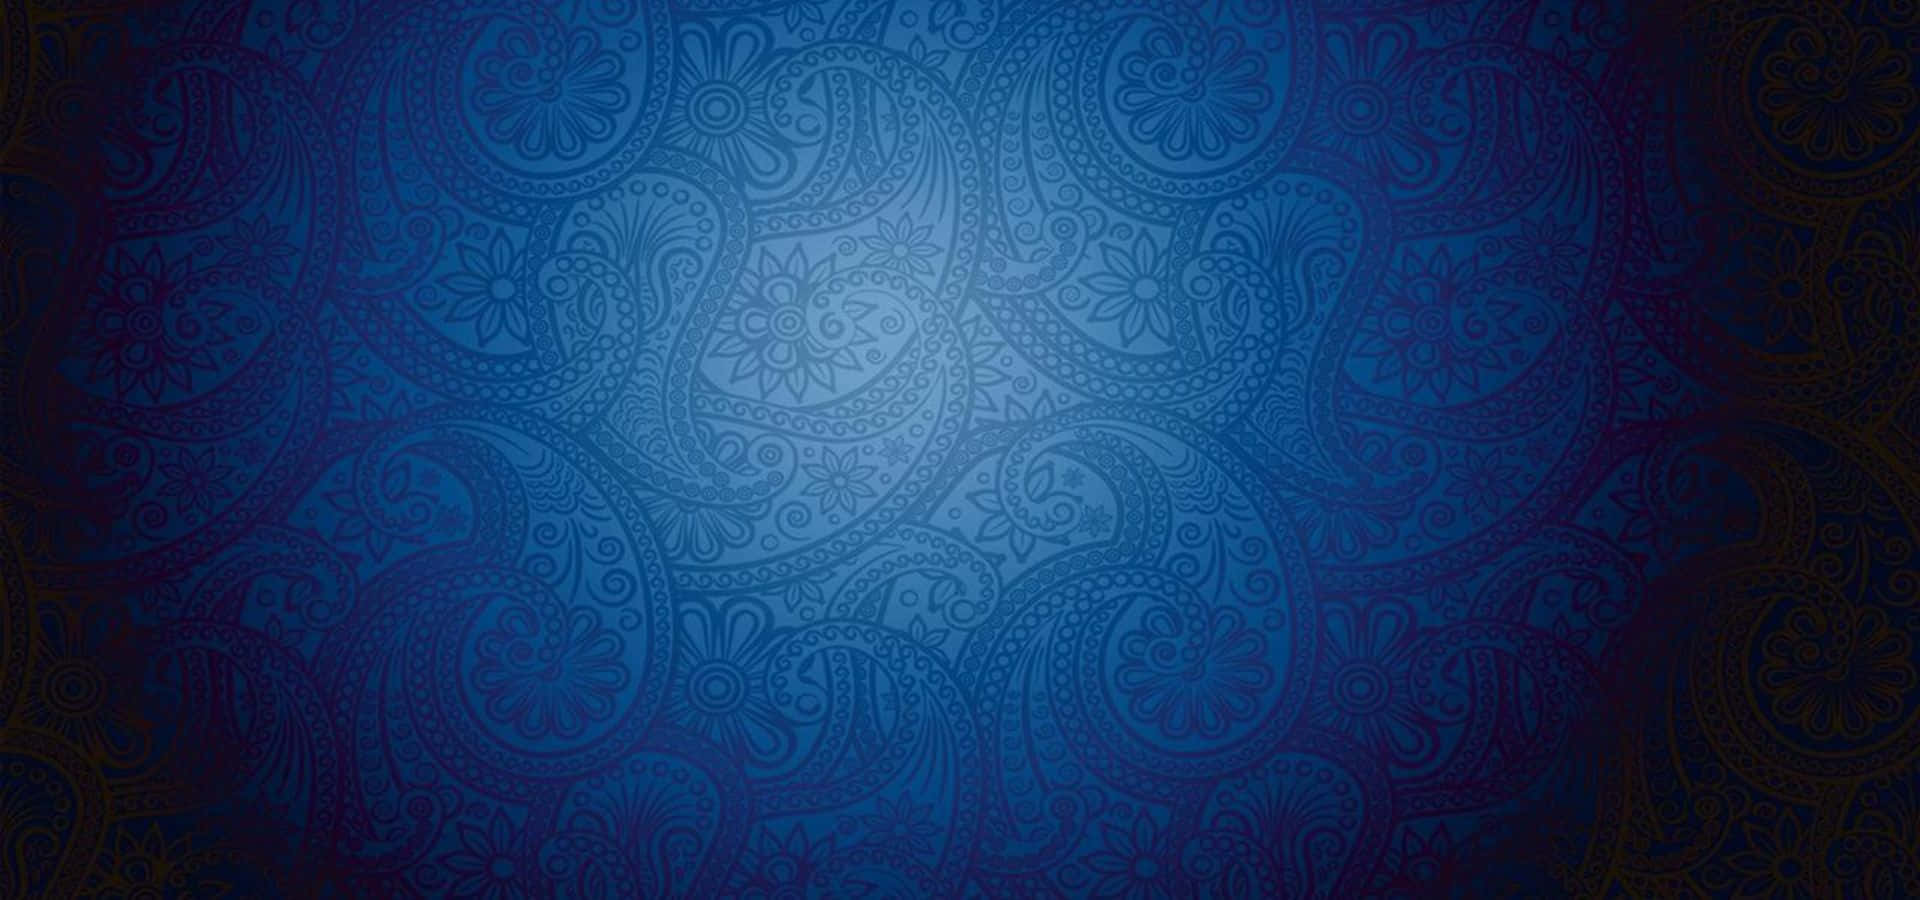 Blue Paisley Wallpaper Vector | Price 1 Credit Usd $1